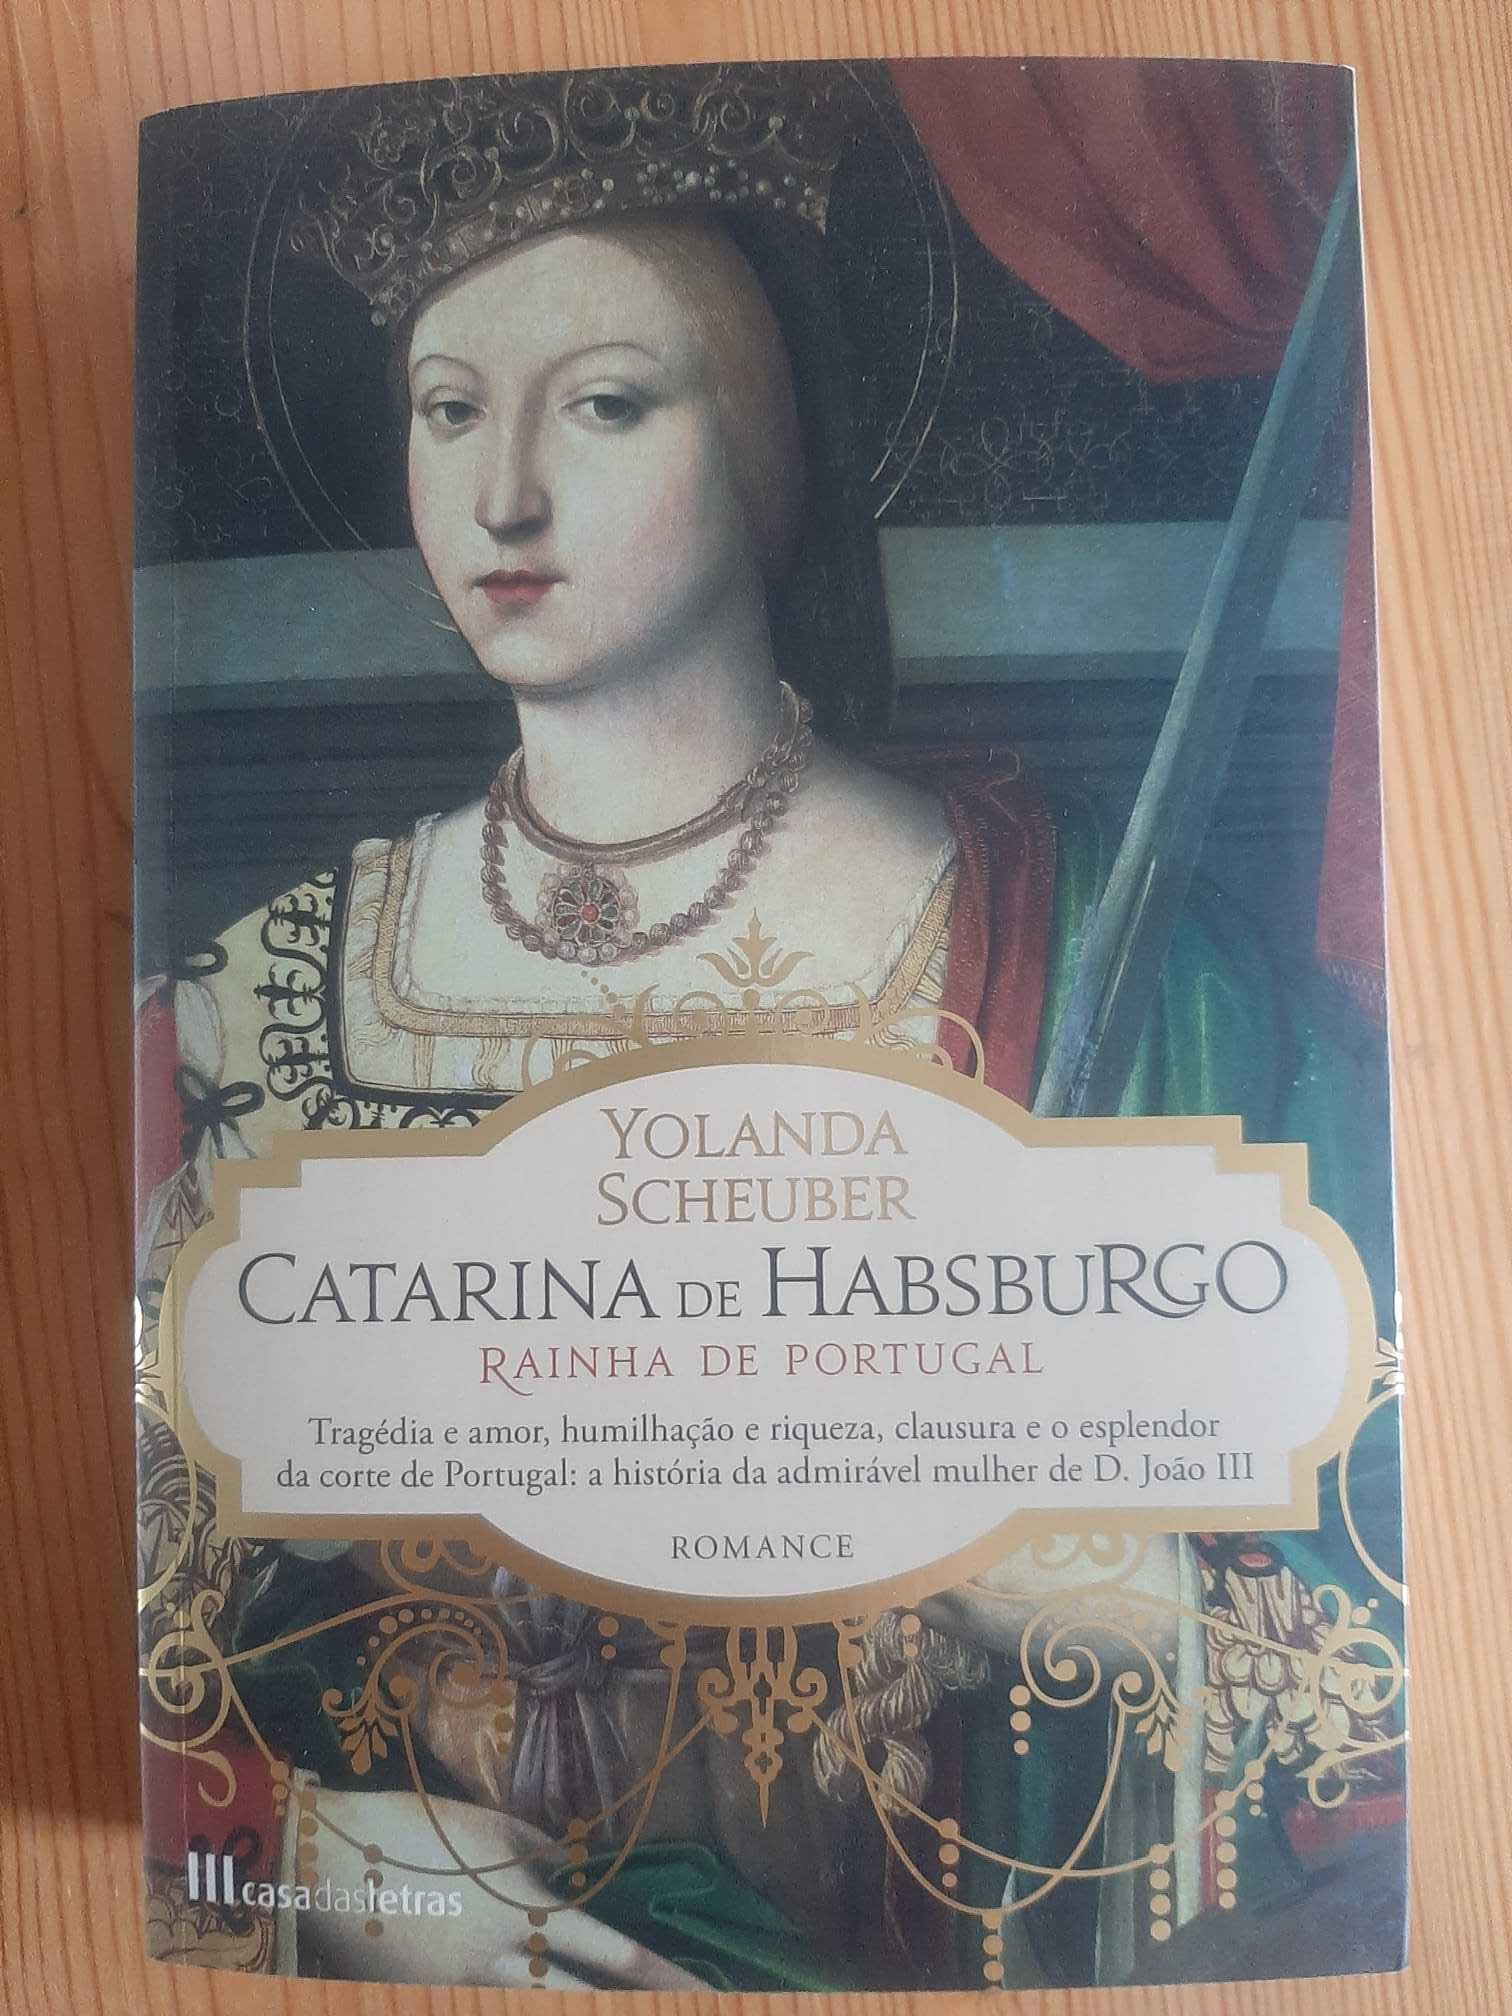 Catarina de Habsburgo Rainha de Portugal de Yolanda Scheuber